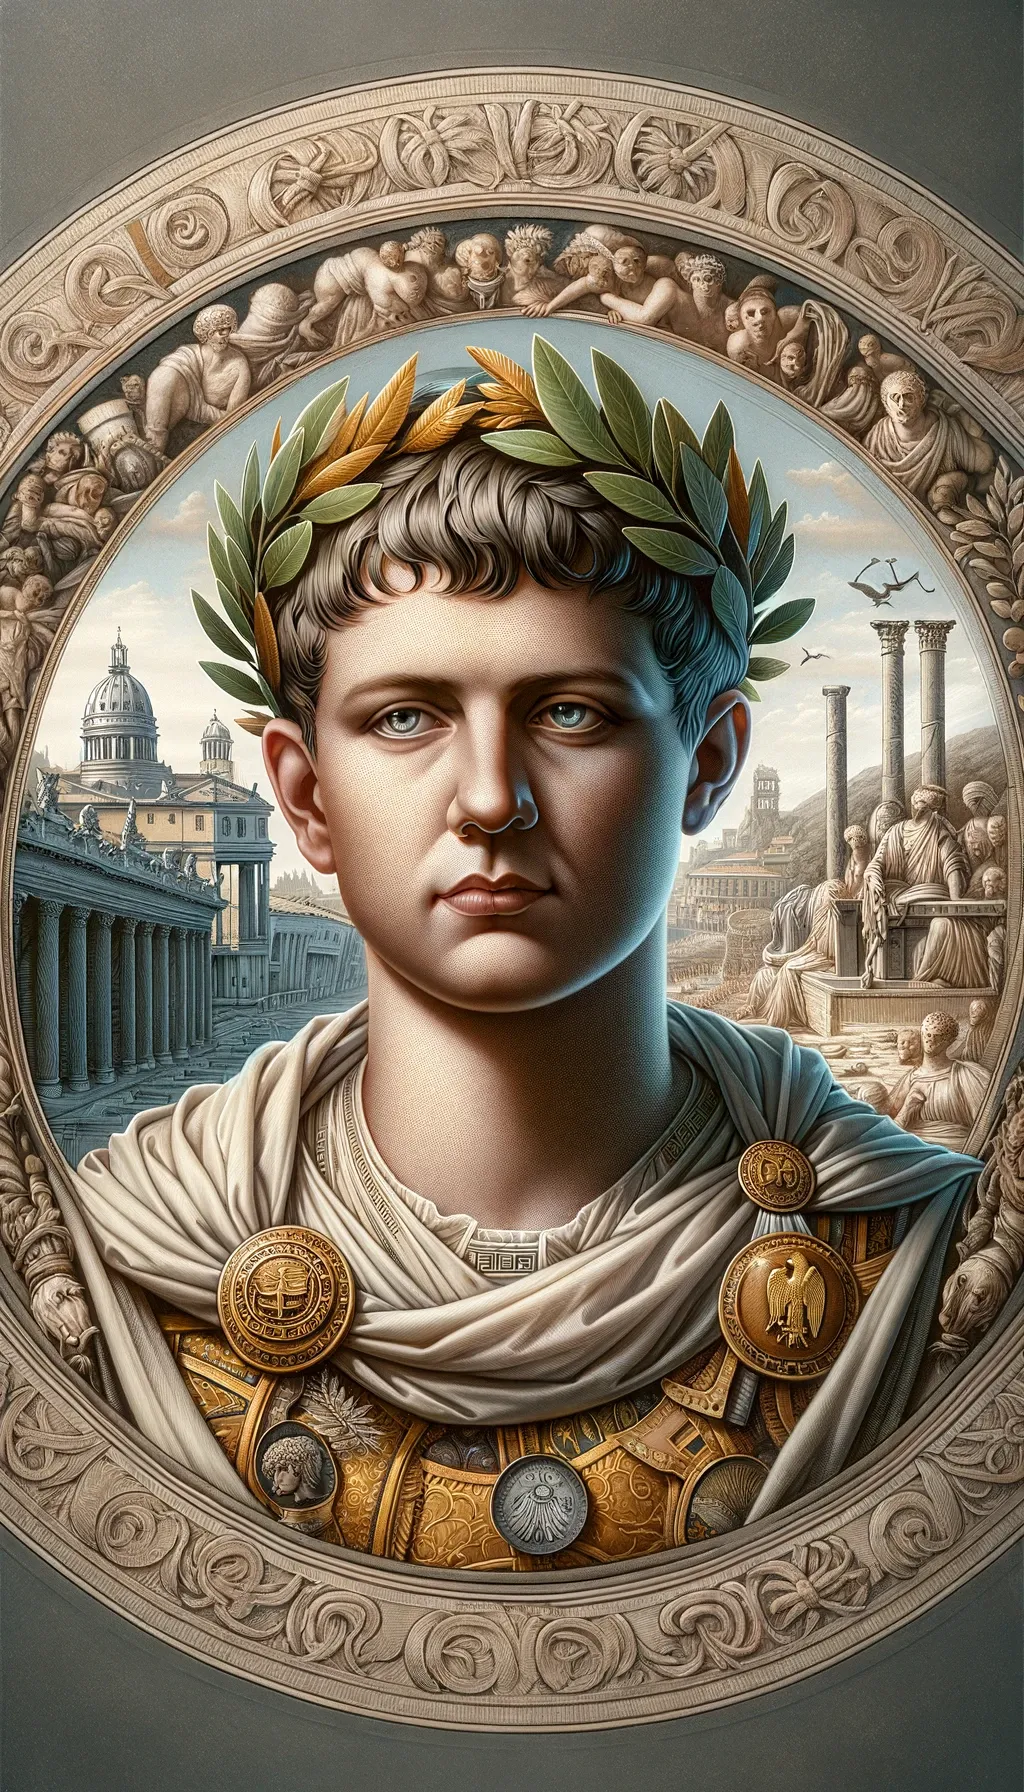 A portrait of Octavian